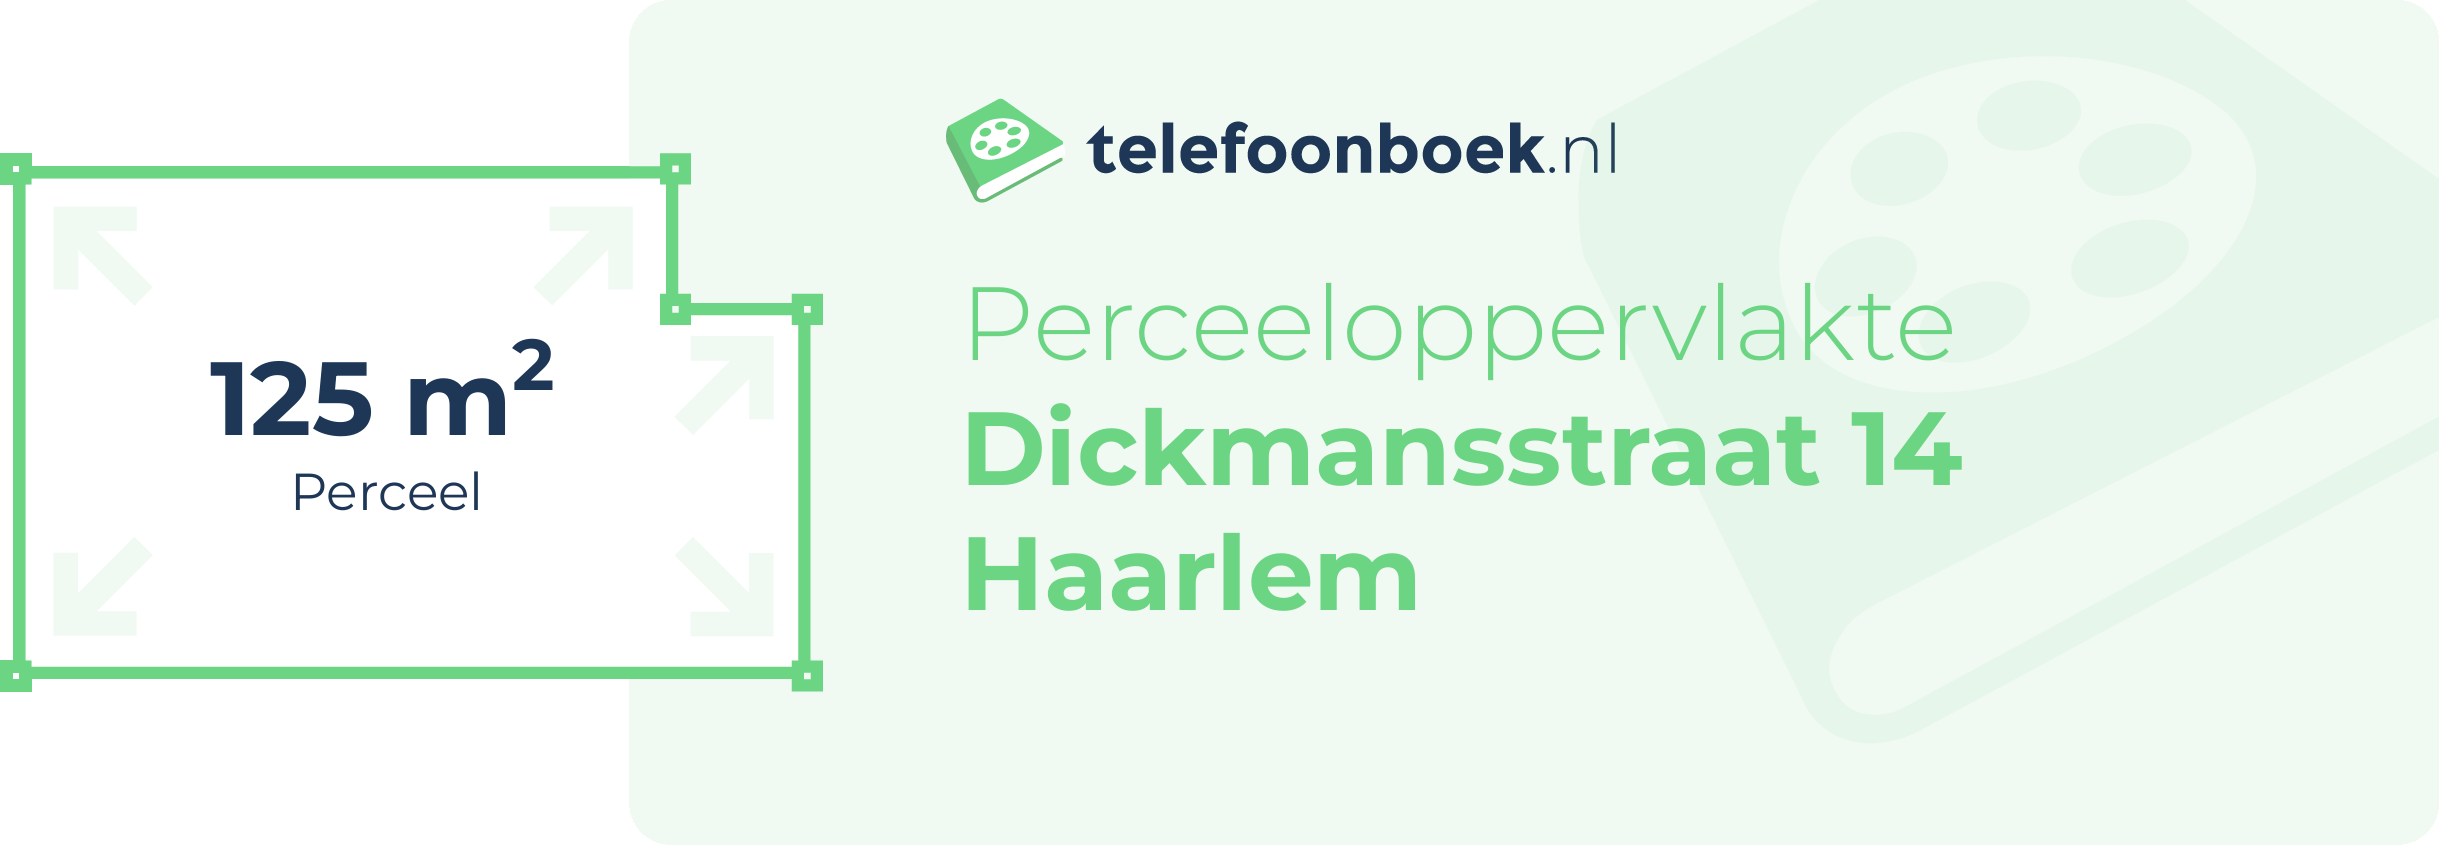 Perceeloppervlakte Dickmansstraat 14 Haarlem